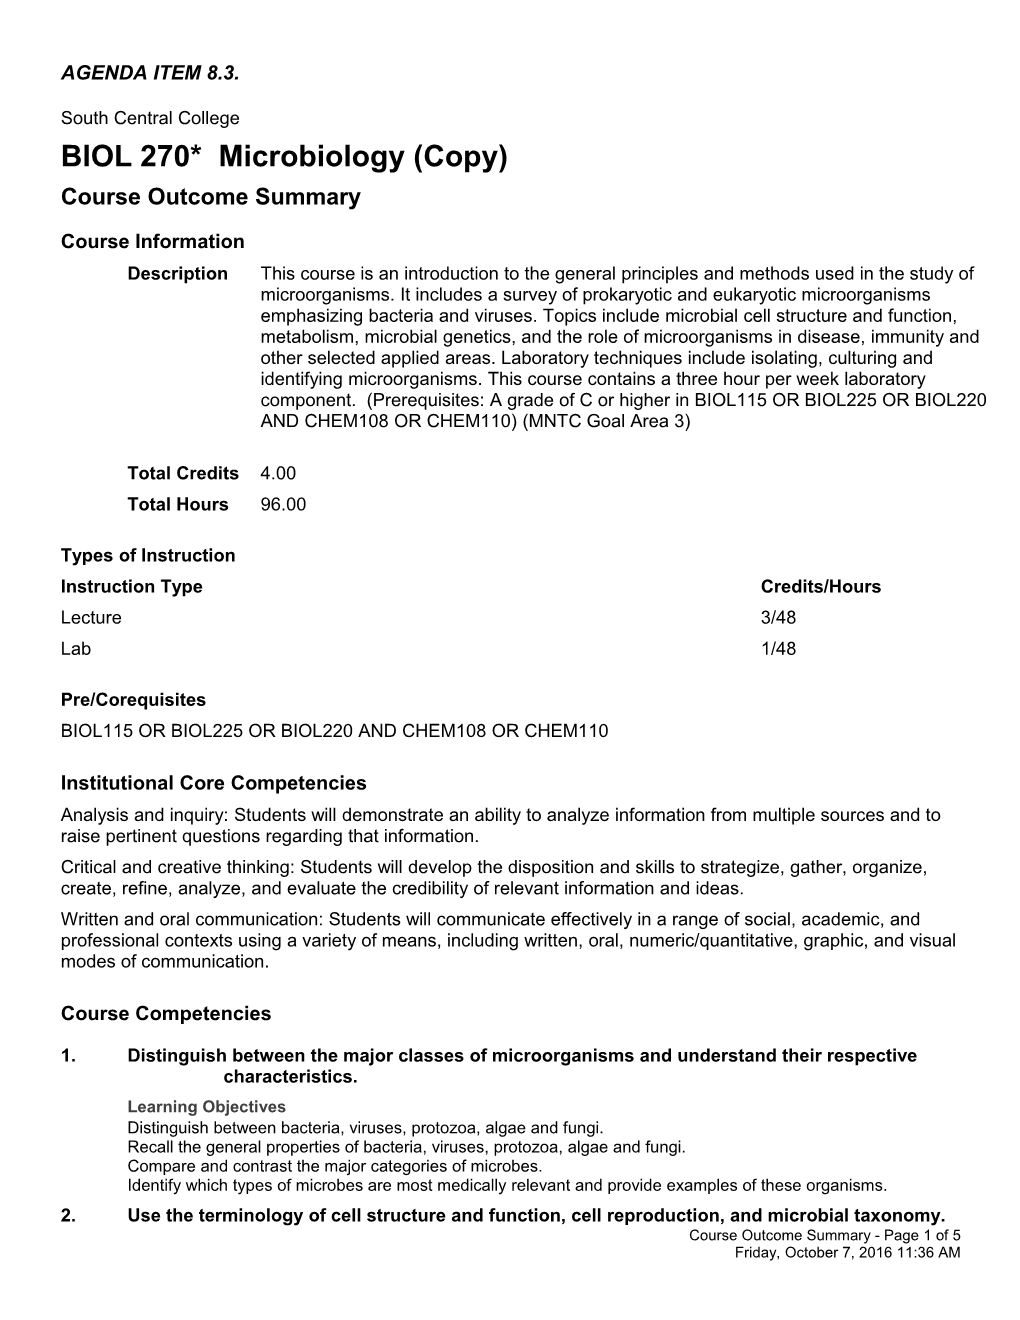 BIOL 270* Microbiology (Copy)